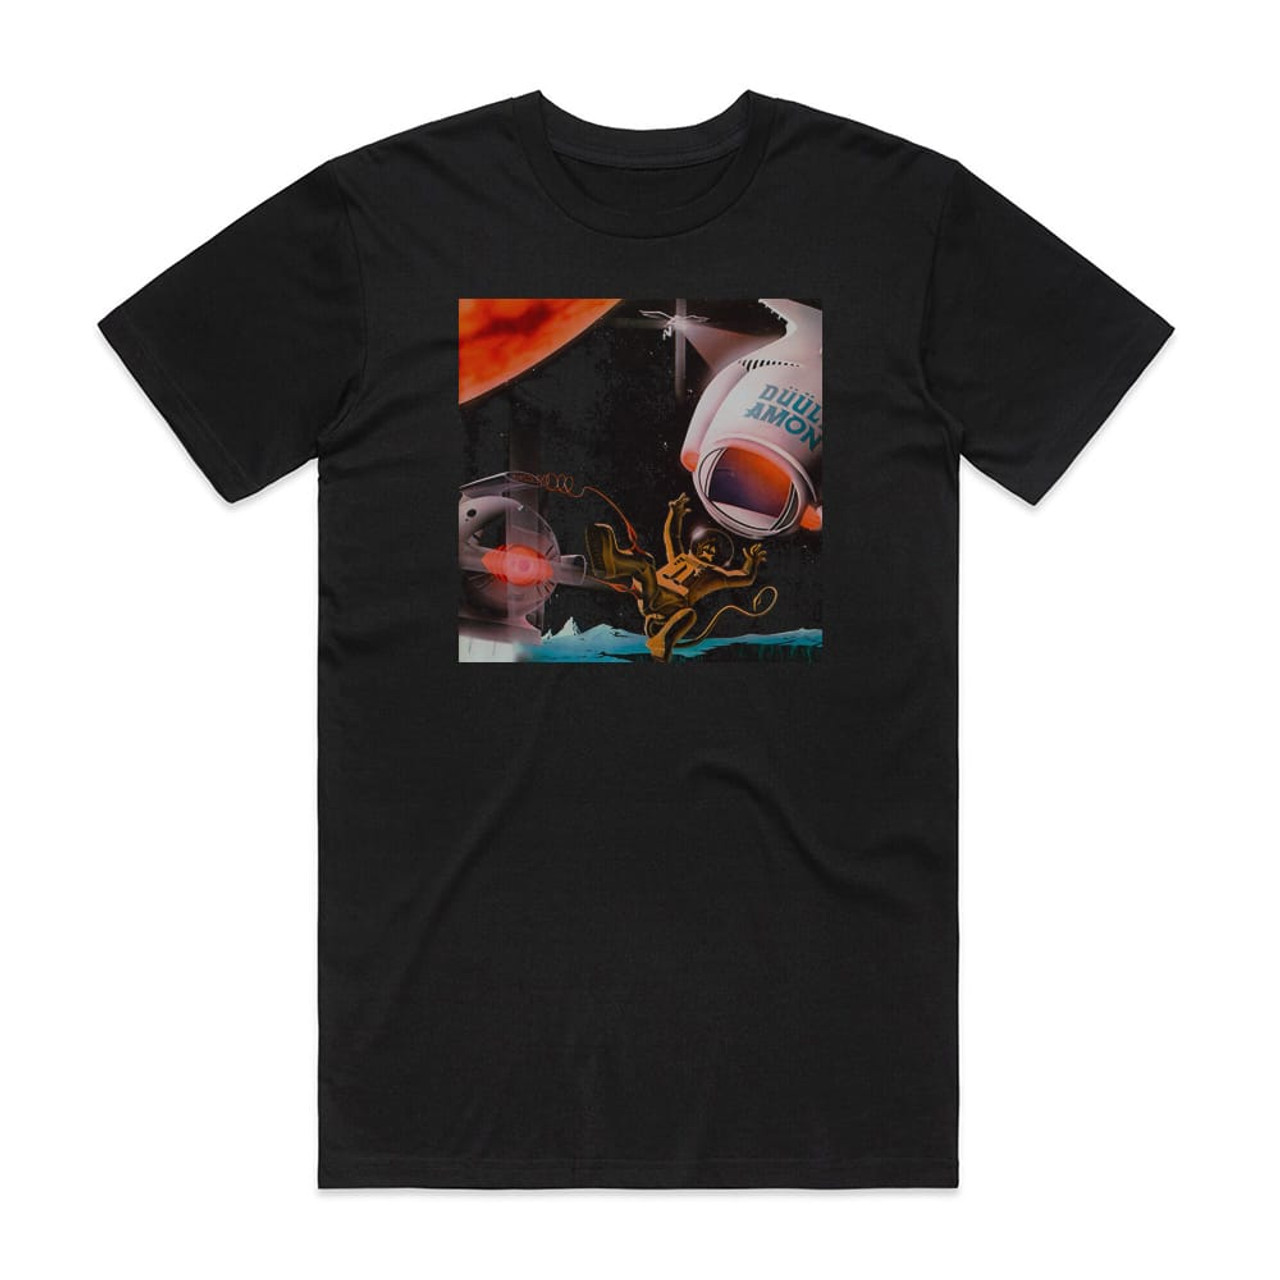 Amon Duul II Hijack Album Cover T-Shirt Black